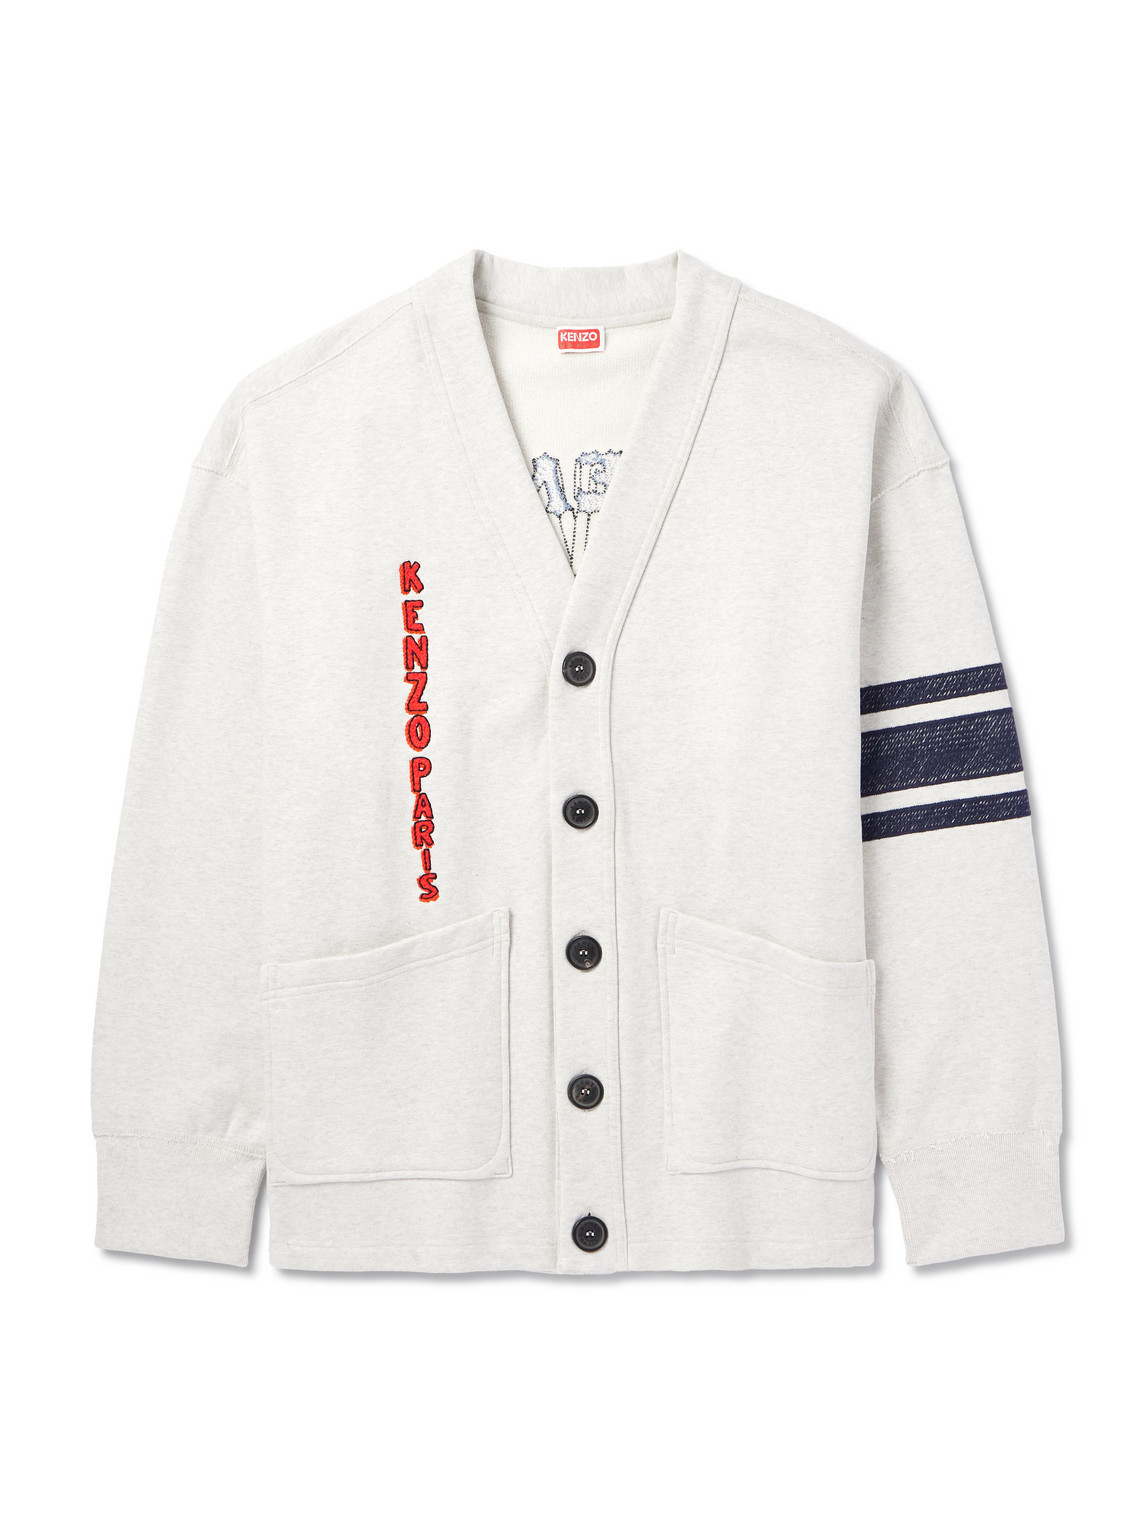 KENZO - Embroidered Striped Cotton-Blend Jersey Cardigan - Men - White - XL von KENZO